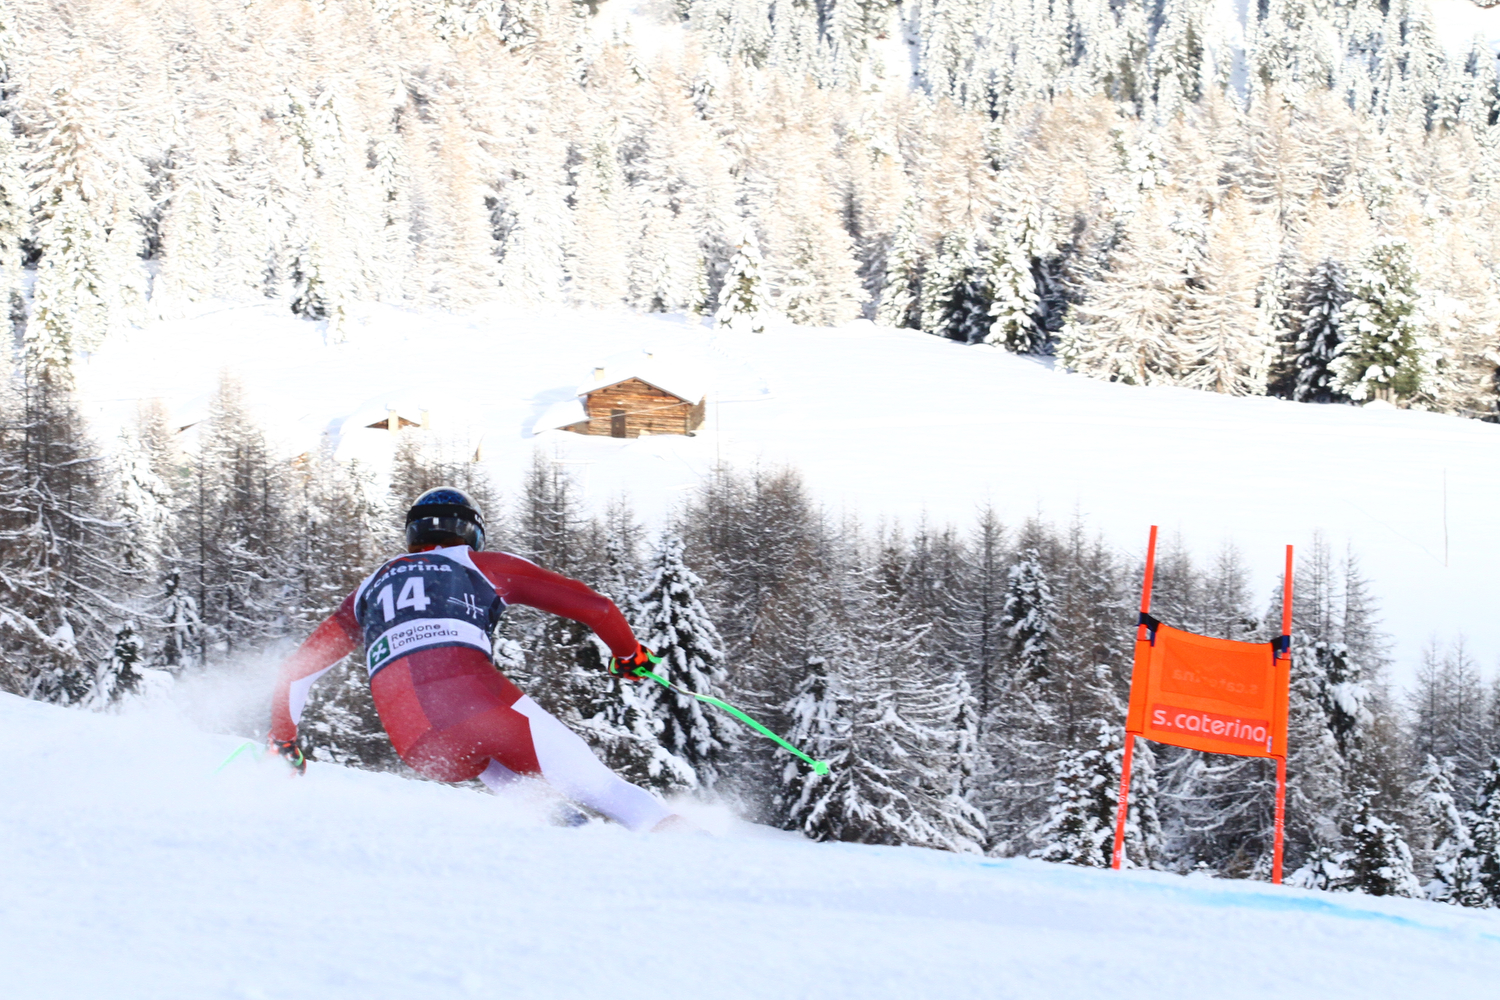 Fis Alpine Skiing Europa Cup, Santa Caterina Valfurva (ITA), 14/12/23, Vincent Wieser, photo credit: Acmediapress